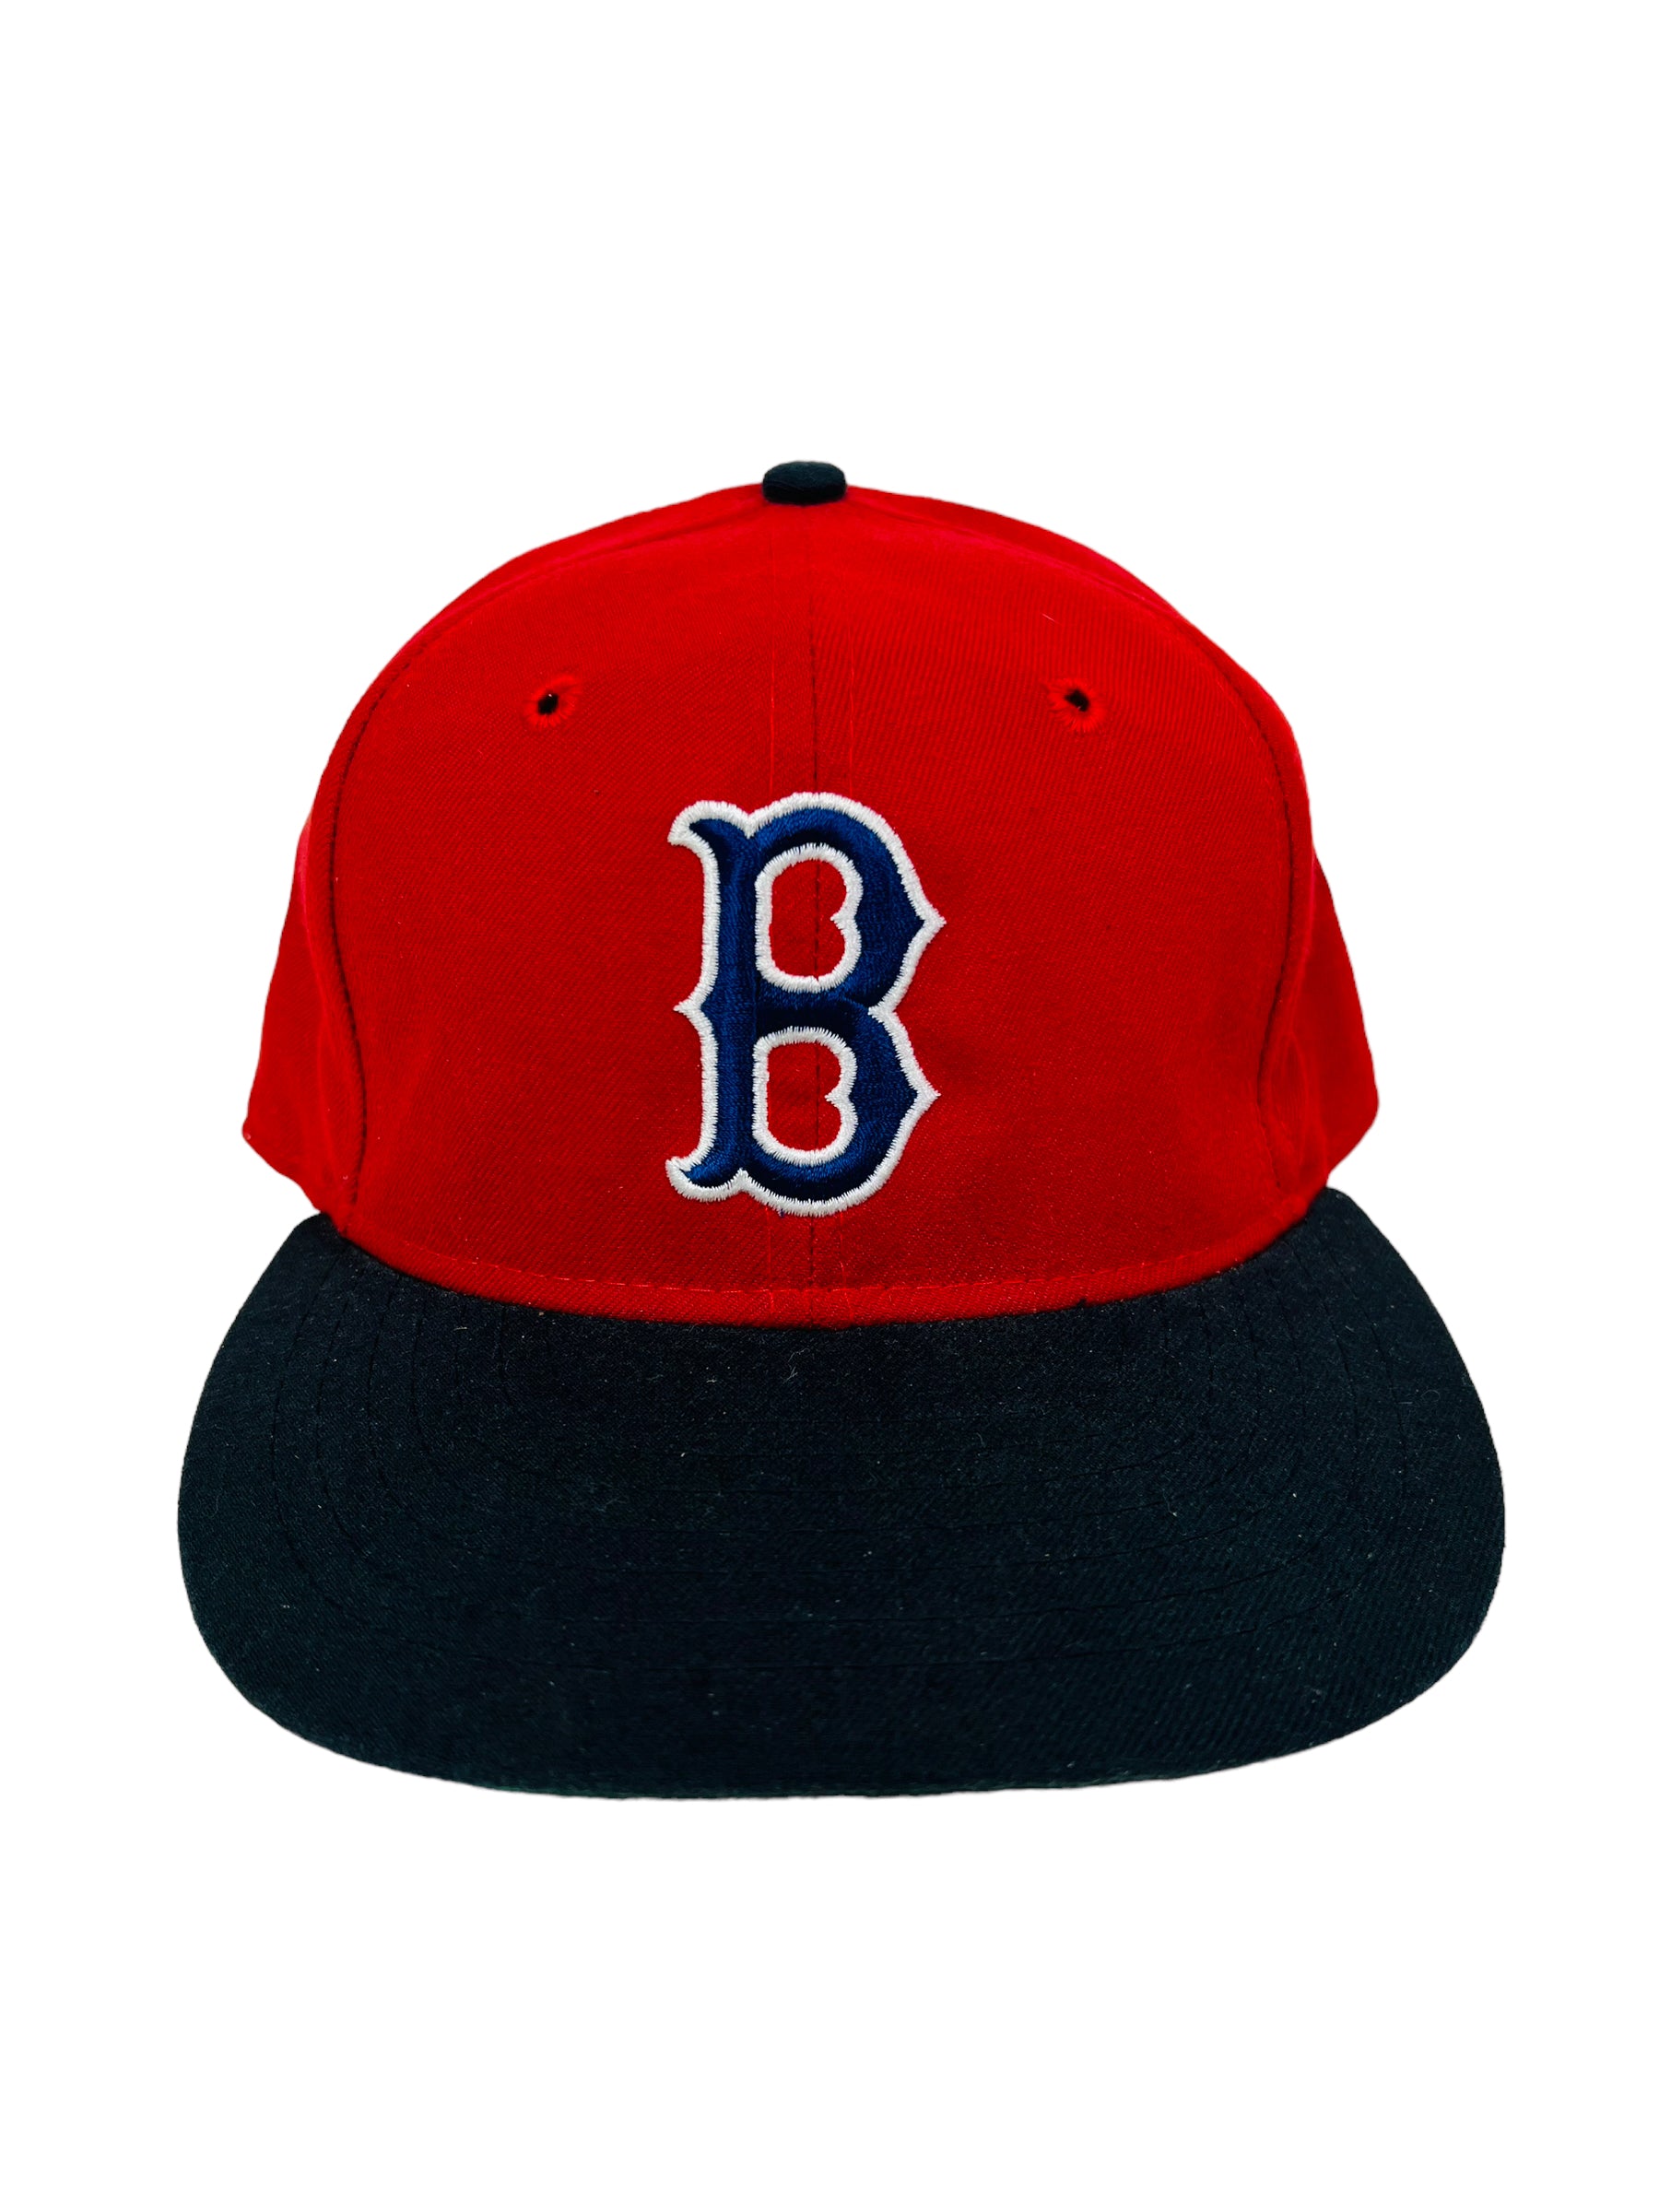 boston red sox hats